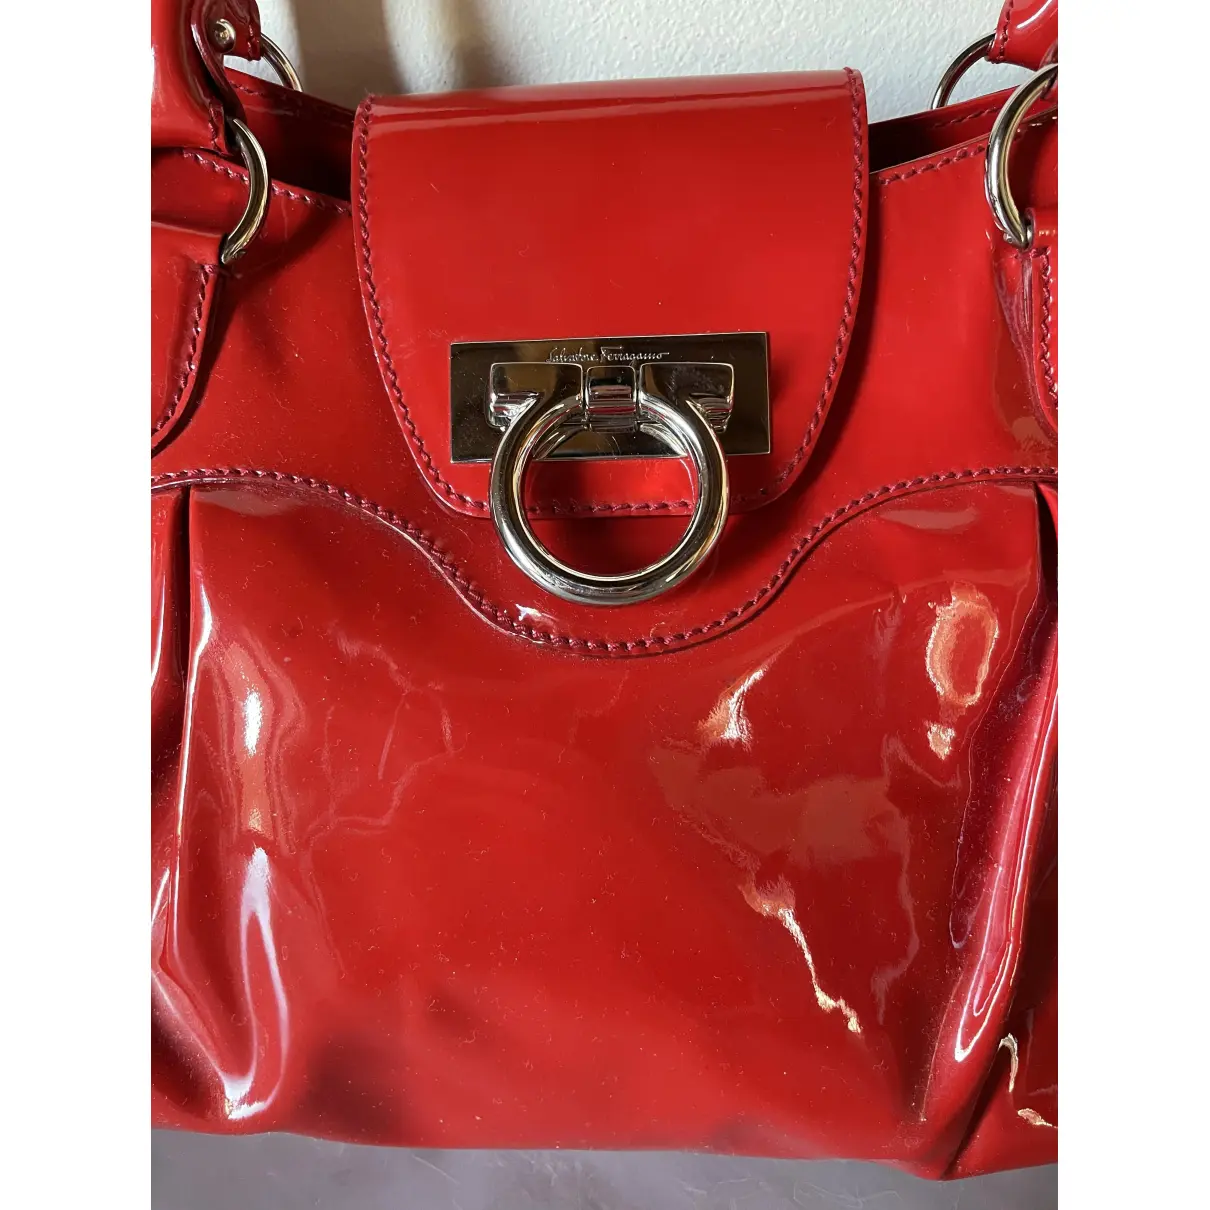 Buy Salvatore Ferragamo Patent leather handbag online